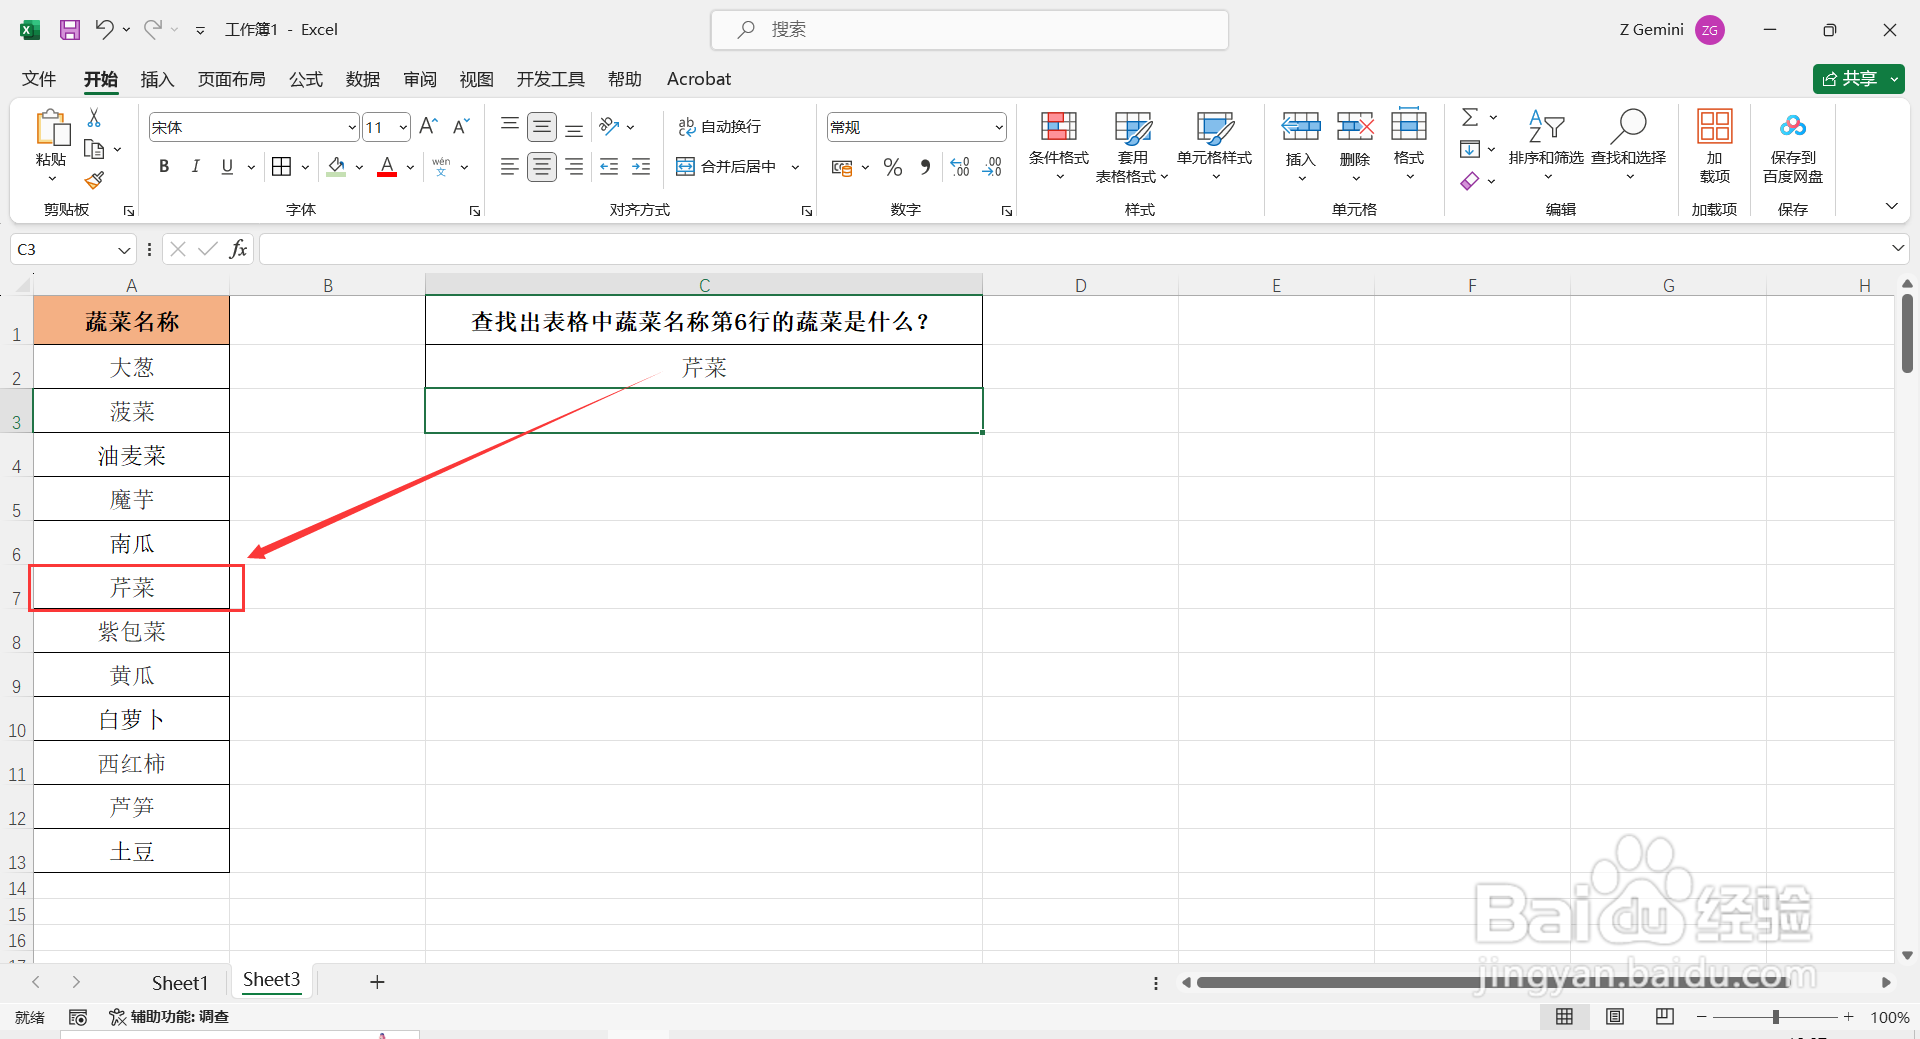 Excel中INDEX函数的使用方法